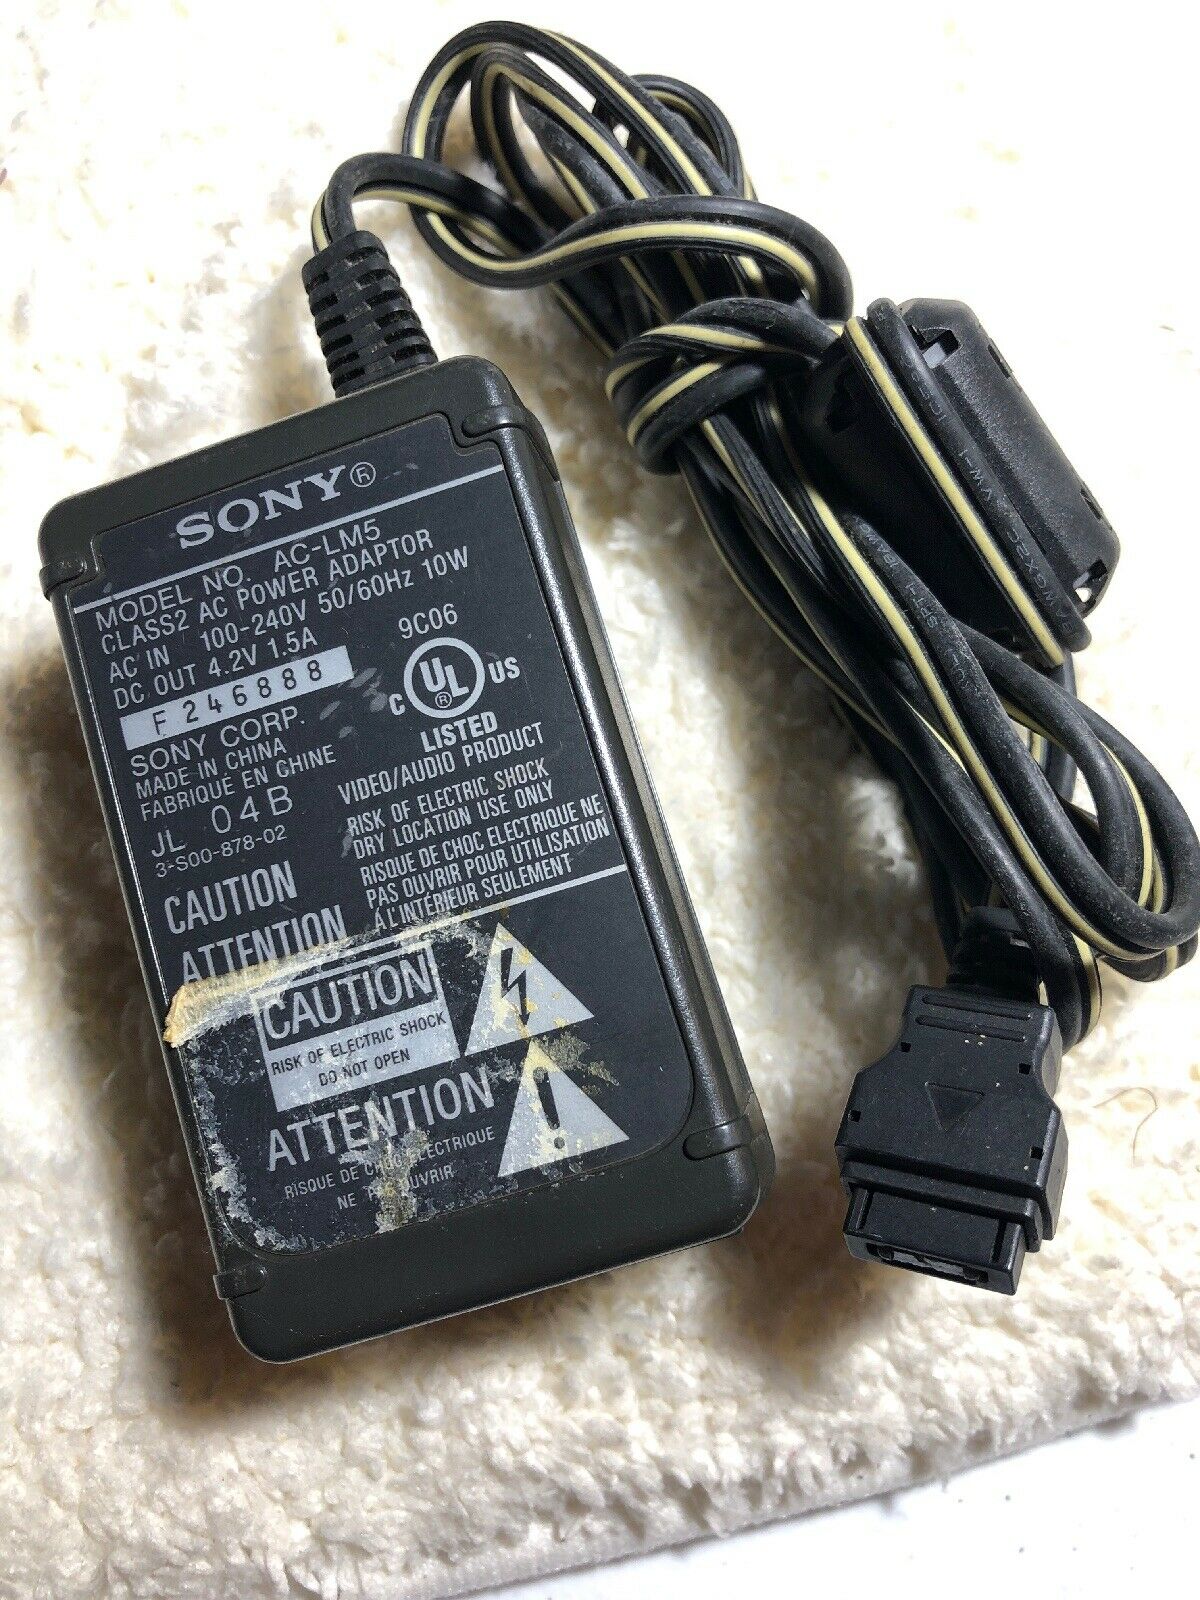 Sony AC-LM5A Camera AC Adapter DC 4.2V 1.5A Power Supply Charger US Seller Sony AC-LM5A Camera AC Adapter DC 4.2V 1.5